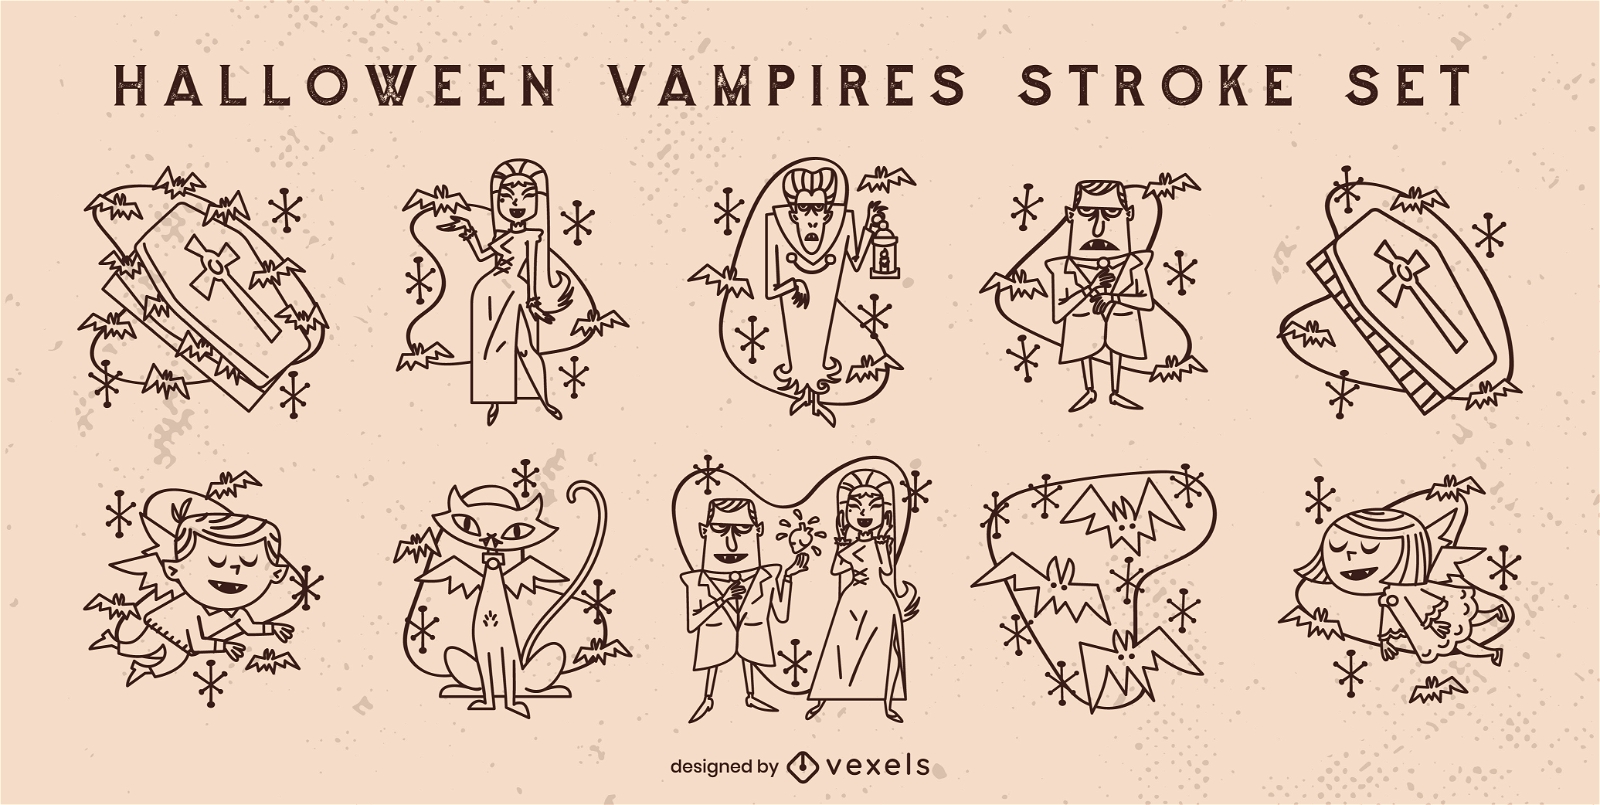 Halloween vampire monsters stroke set